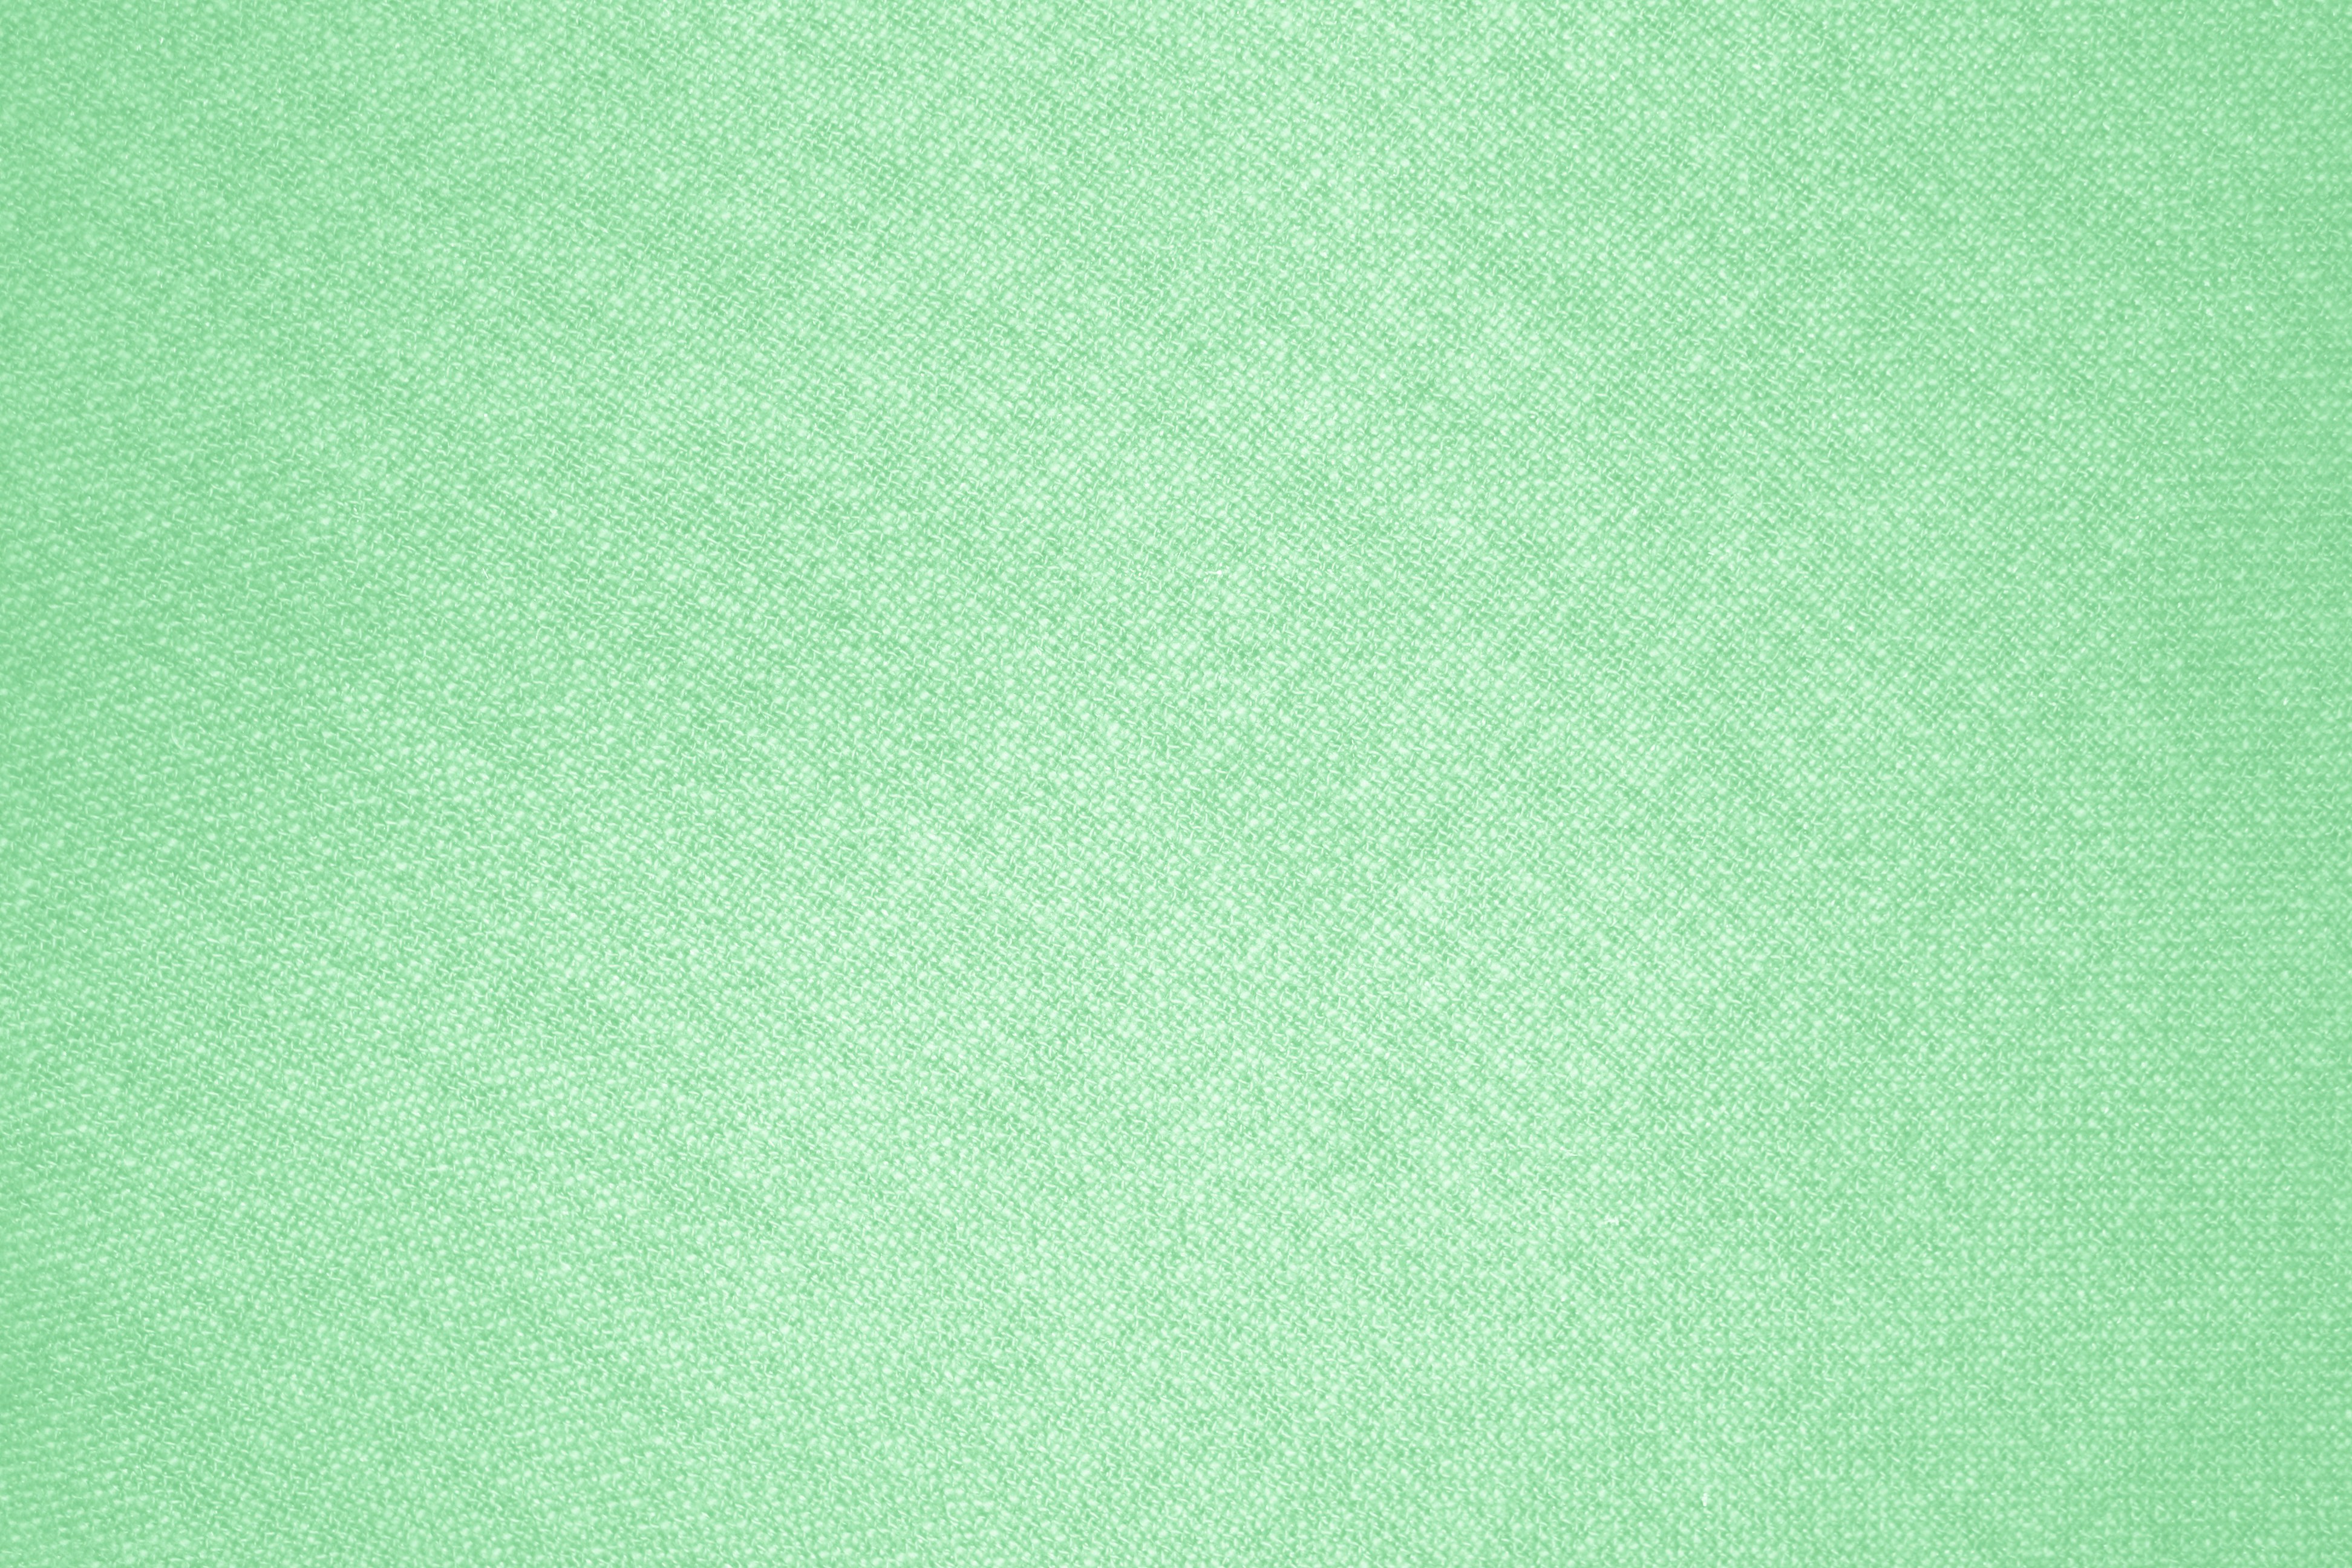 Light Green Fabric Texture Picture Photograph Photos Public